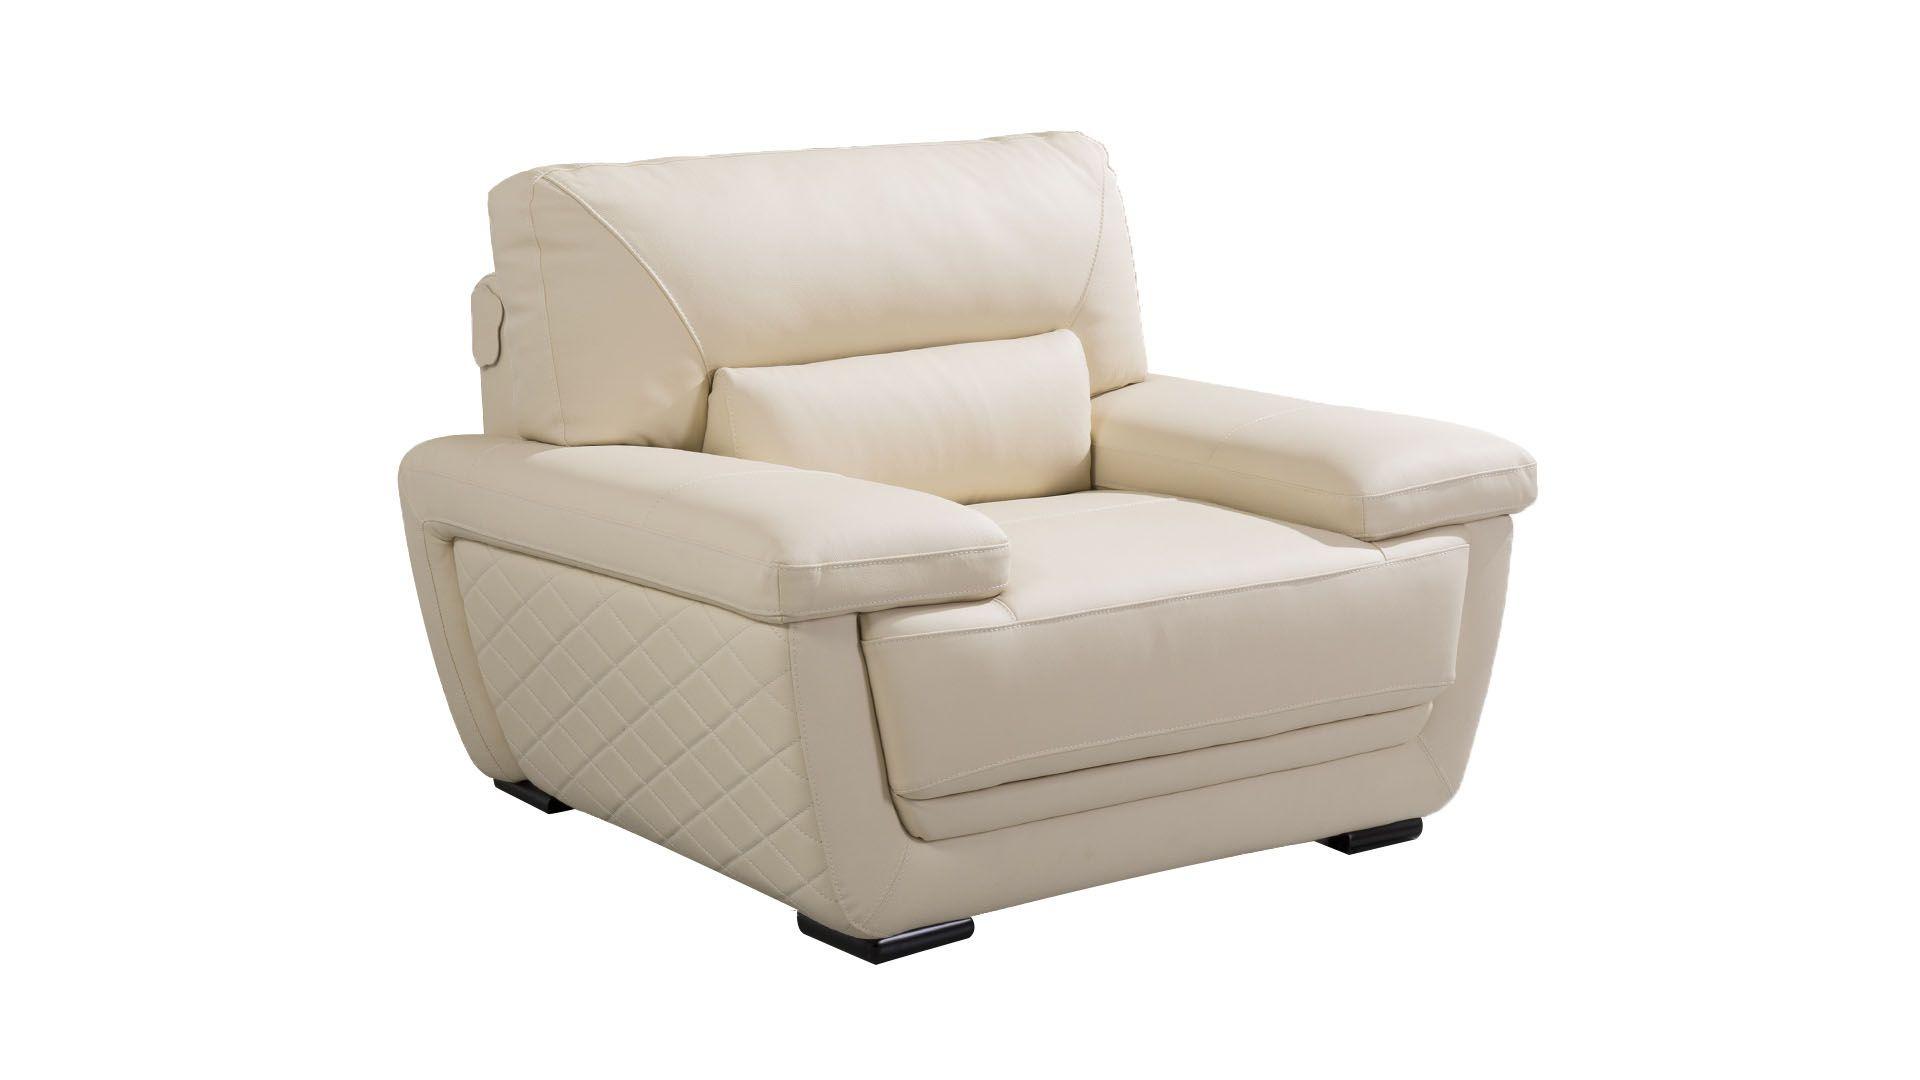 Contemporary, Modern Arm Chair EK019-CRM-CHR EK019-CRM-CHR in Cream Italian Leather